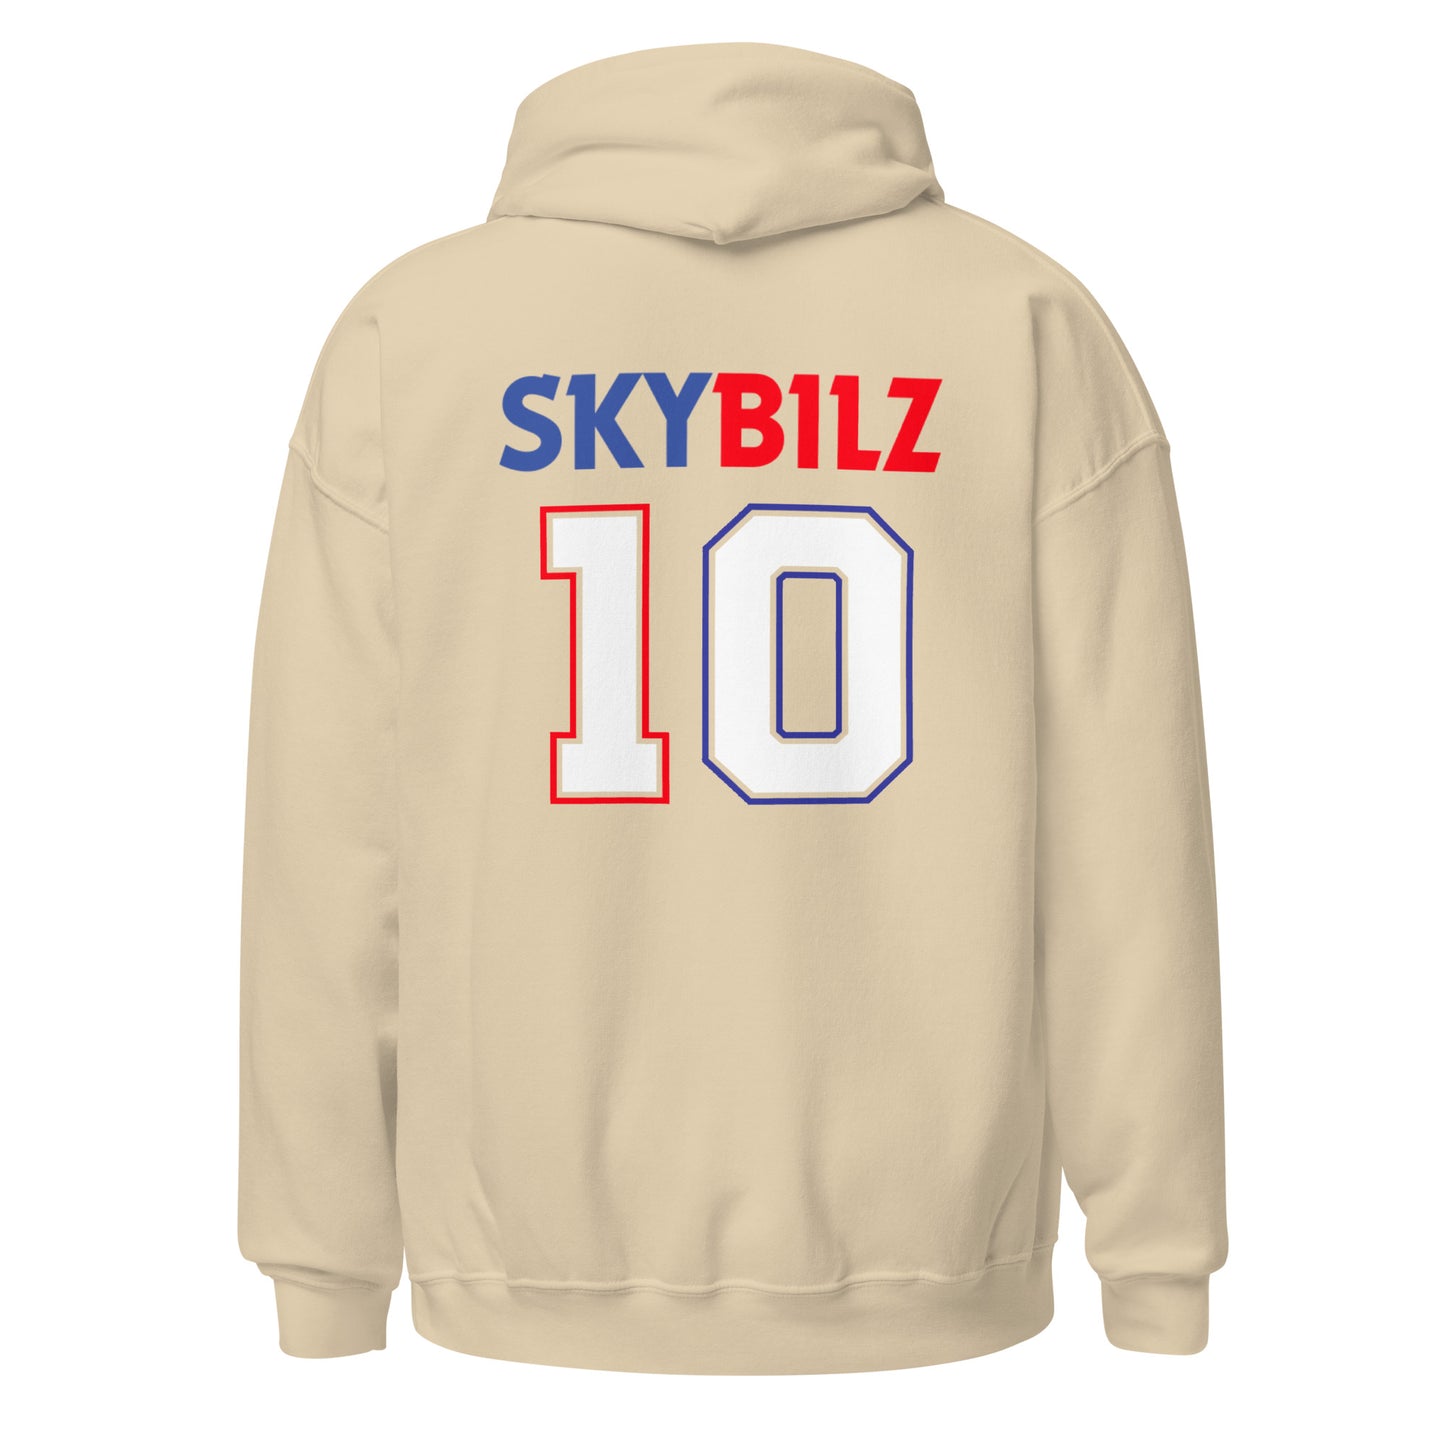 Skybilz - Unisex Hoodie - MLG Skybilz